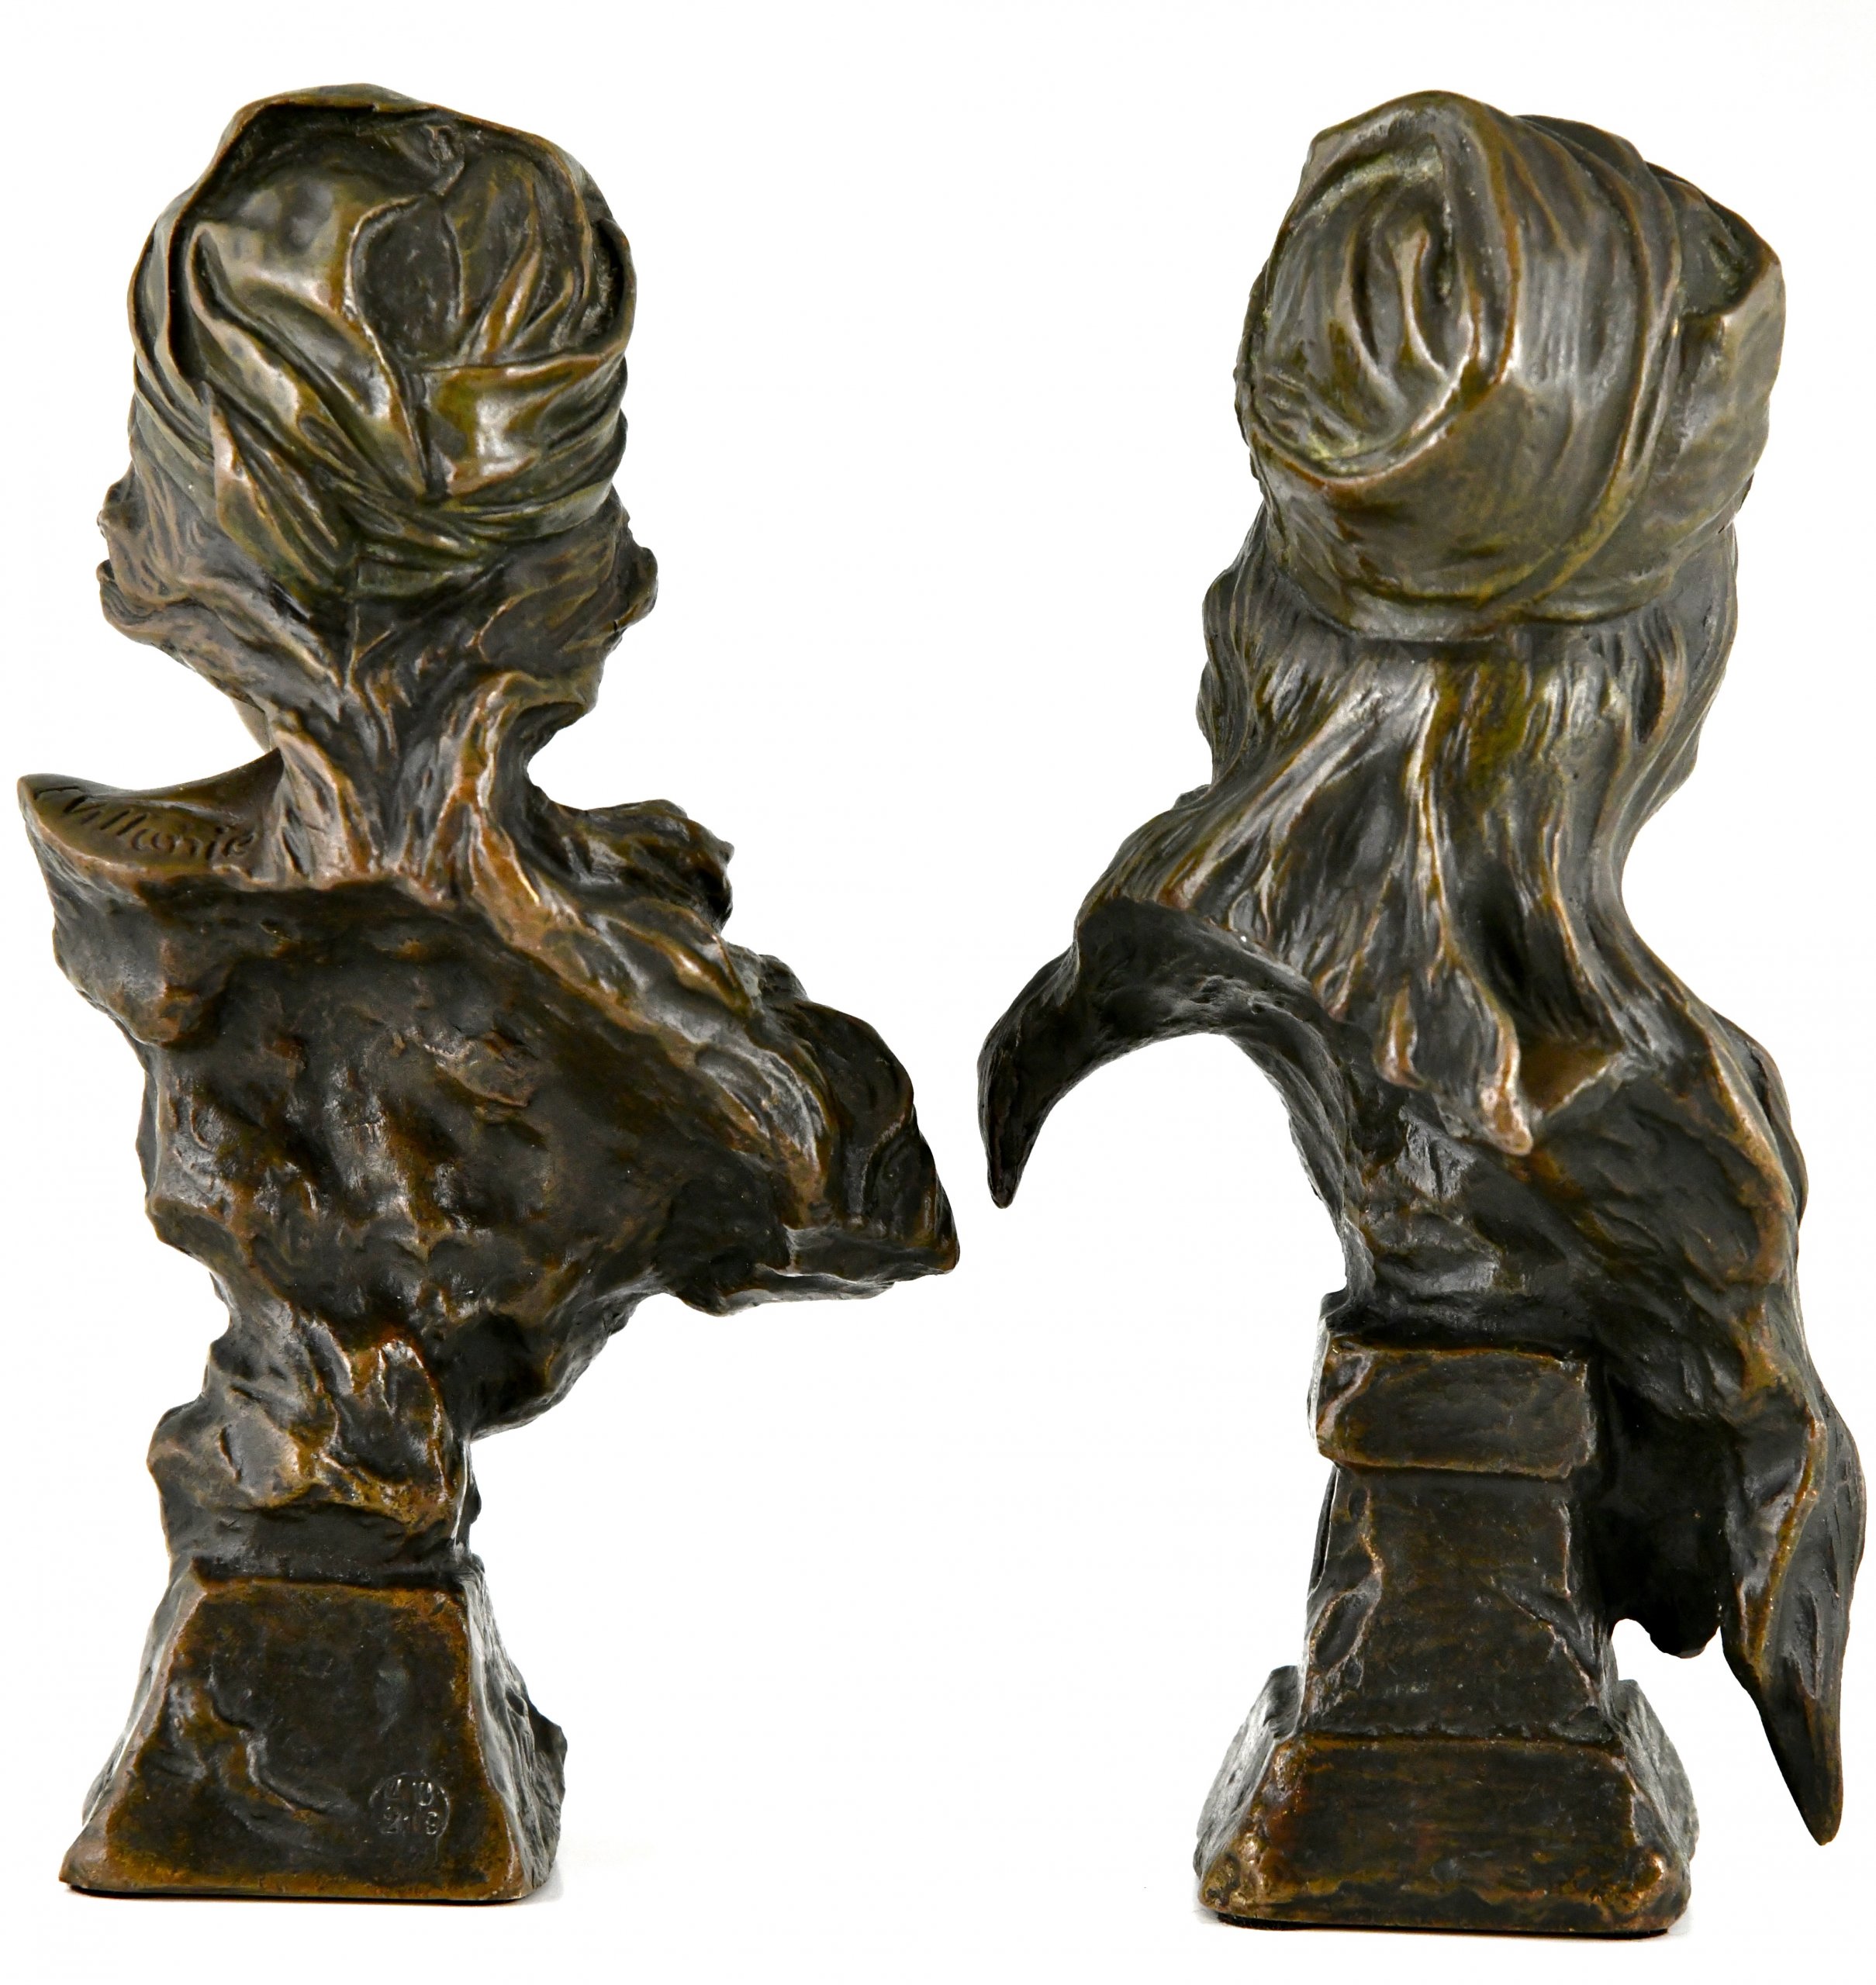 Pair of Art Nouveau bronze busts Mignon and Esmeralda.